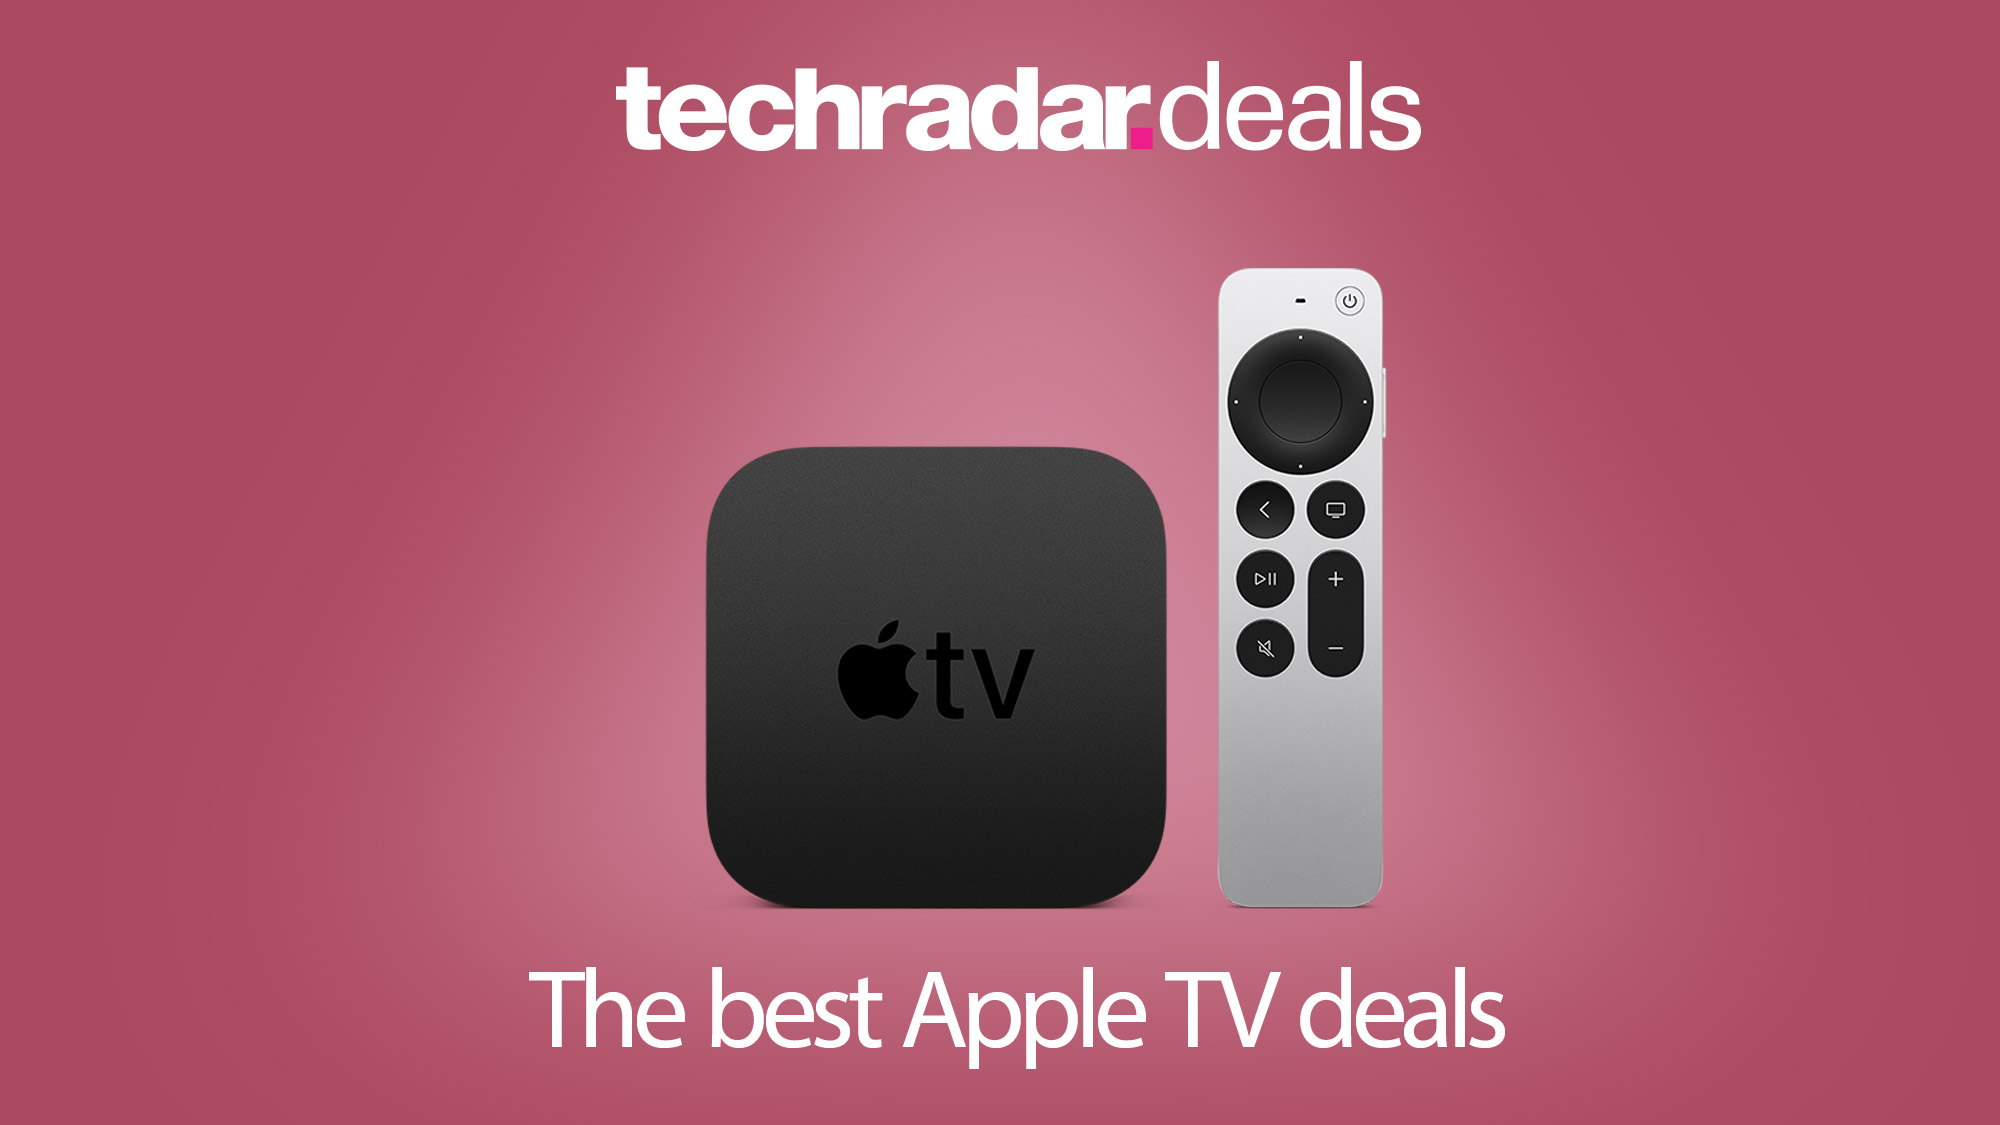 Ontwaken Verzorgen afstuderen The cheapest Apple TV prices, sales and deals for January 2022 | TechRadar